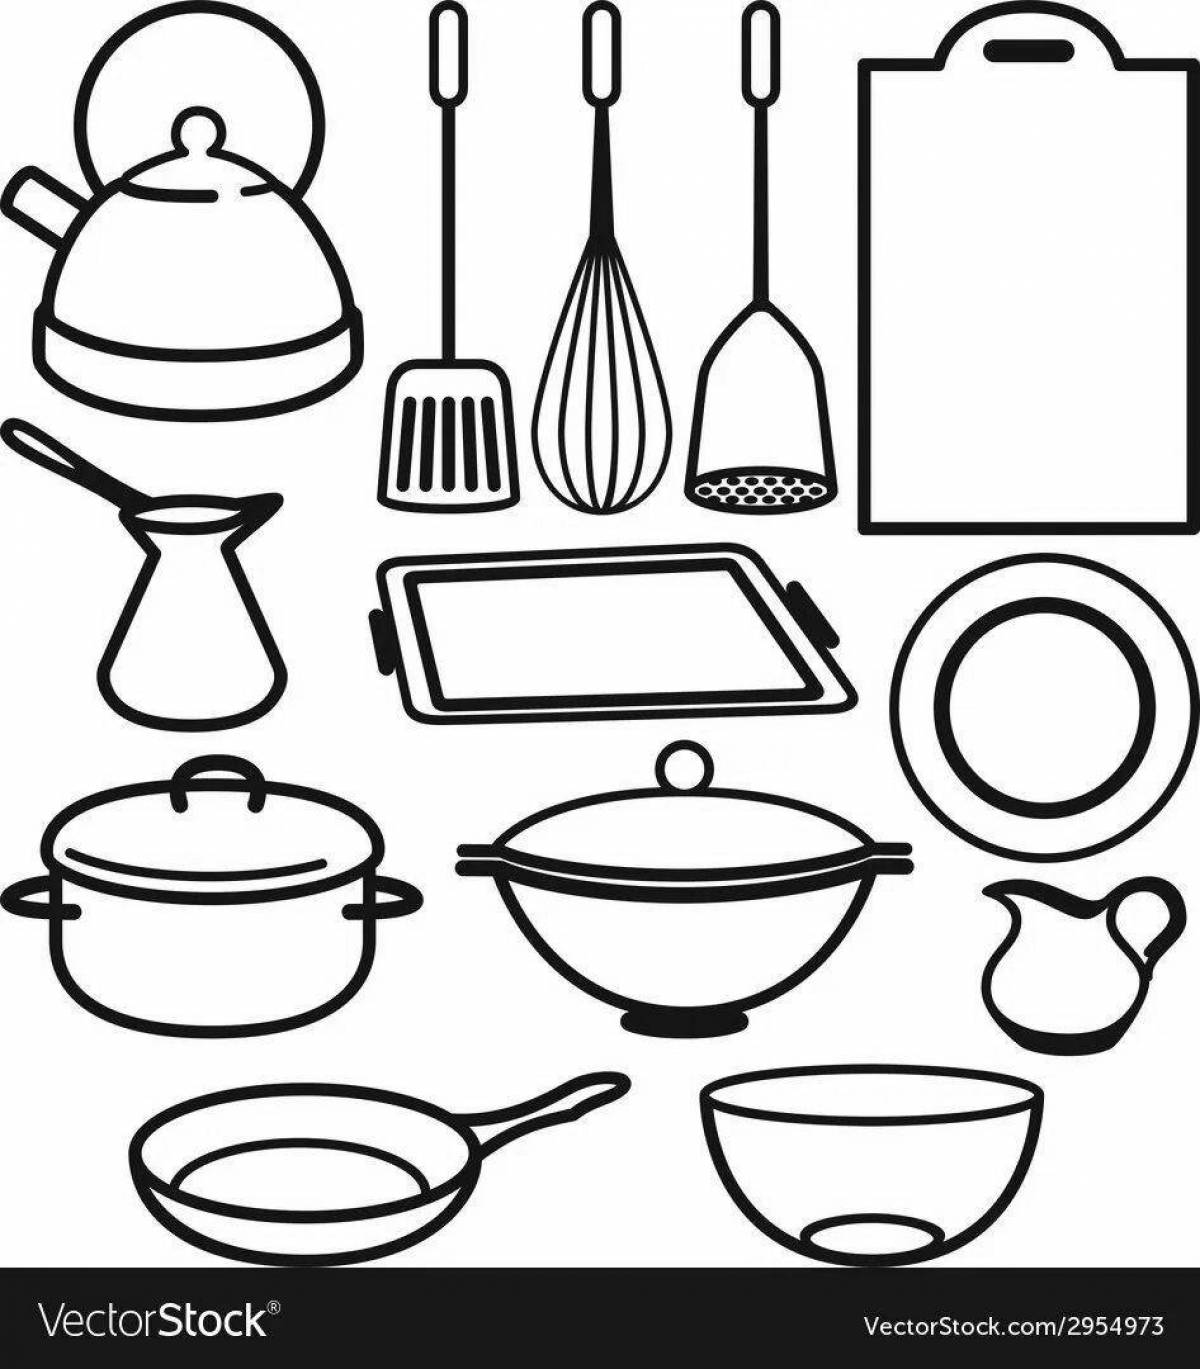 Adorable kitchen appliances coloring page